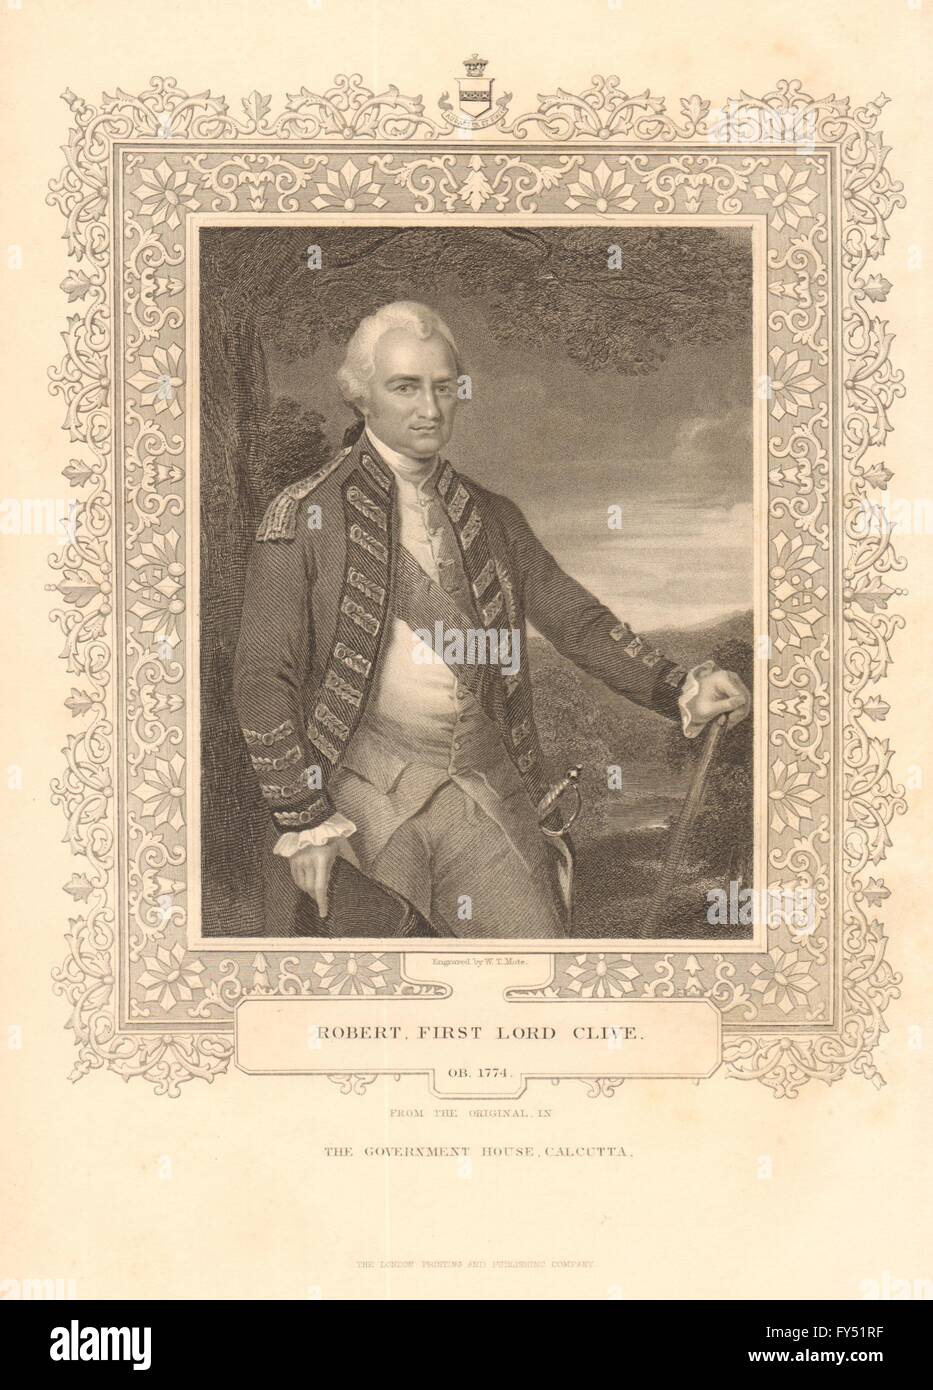 La historia británica. Robert, primer Lord Clive de la India. TALLIS, grabado antiguo 1849 Foto de stock